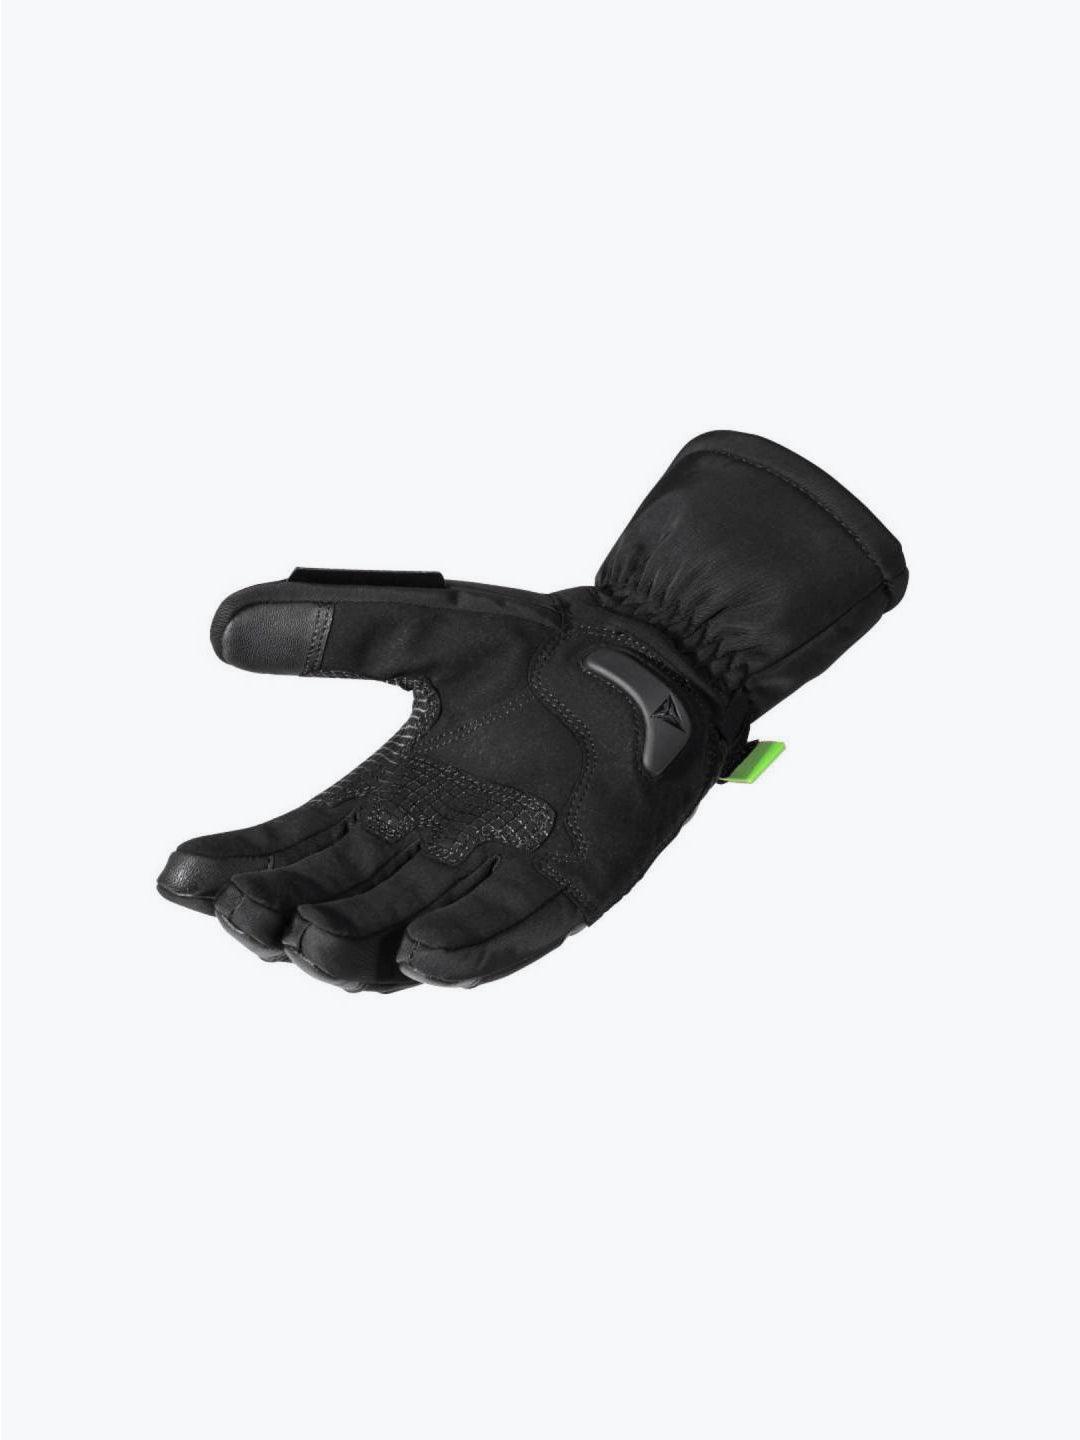 Motowolf Gloves Black Green 0318 - Moto Modz